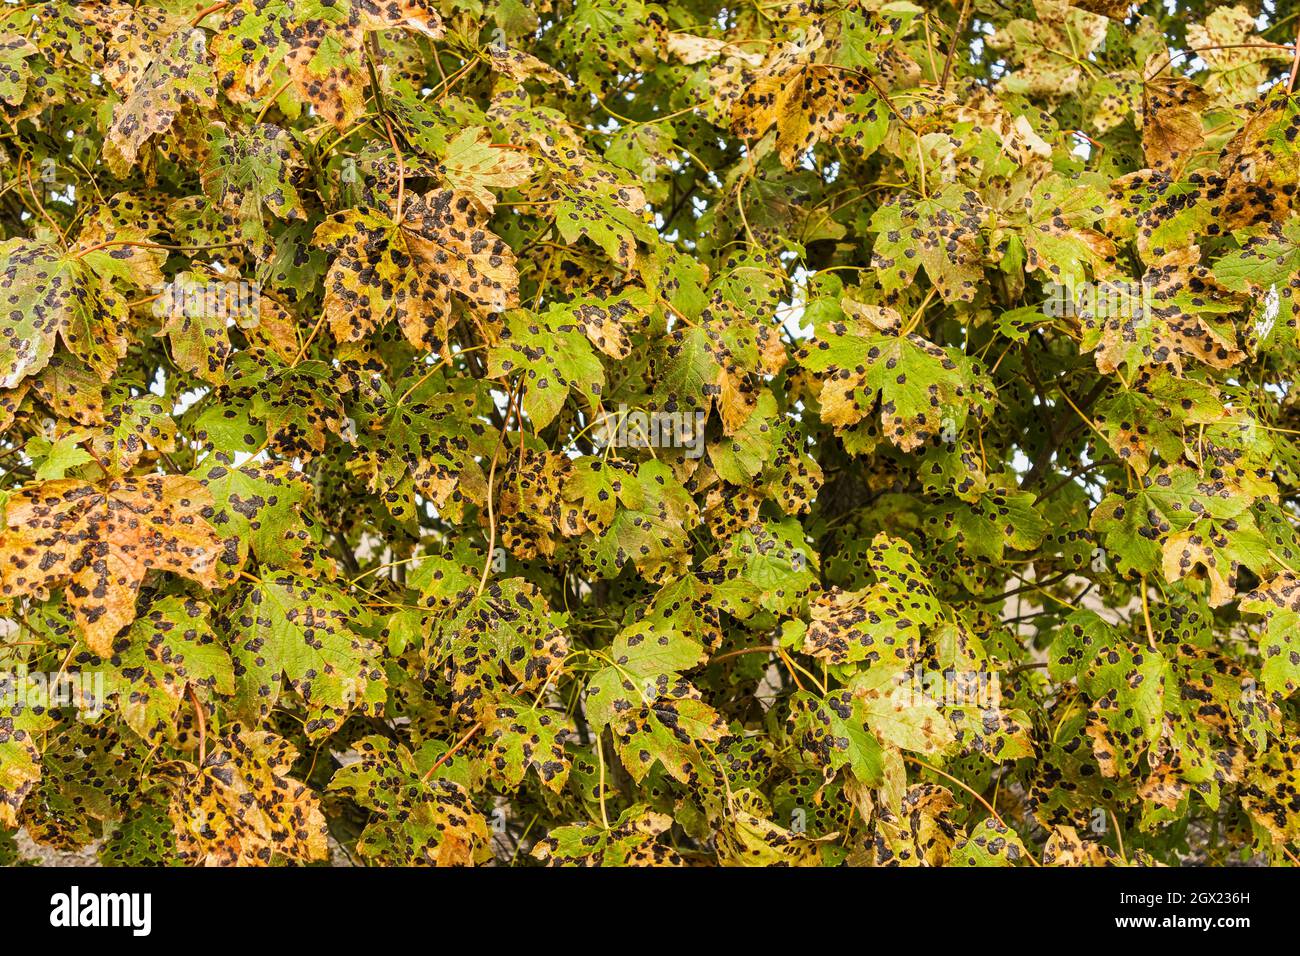 Fungal pathogen Rhytisma acerinum or tarspot fungus, on Acer pseudoplatanus or Sycamore leaves in UK Autumn. Stock Photo